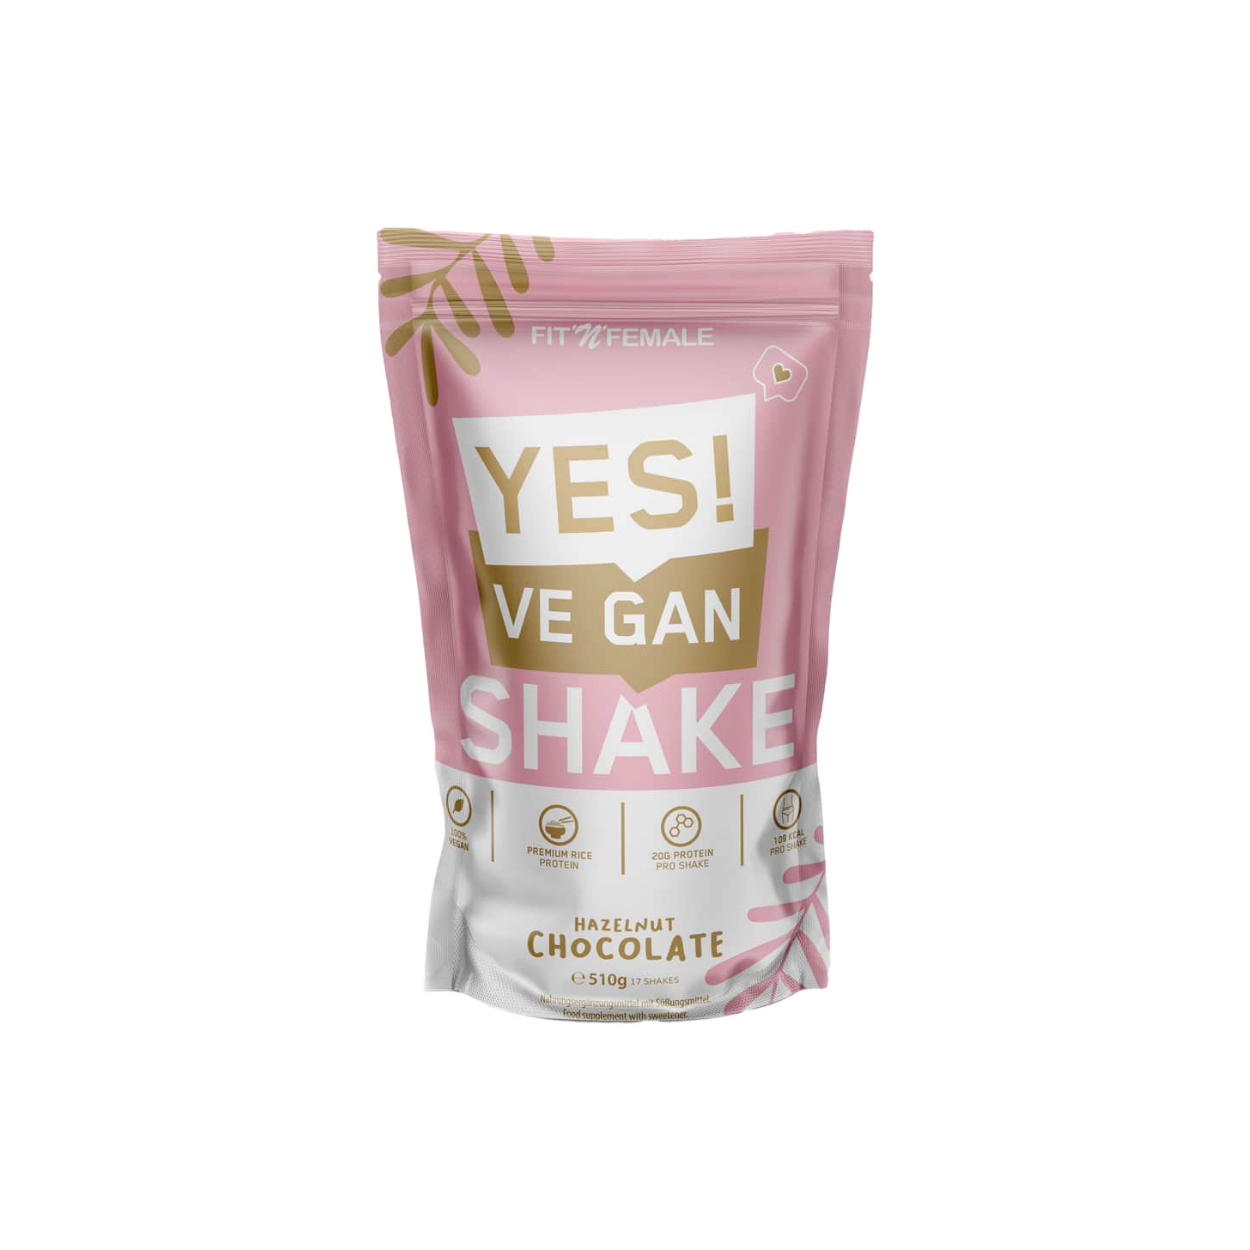 Fit n Female Yes! Ve-Gan Shake Chocolate Hazelnut (500g)